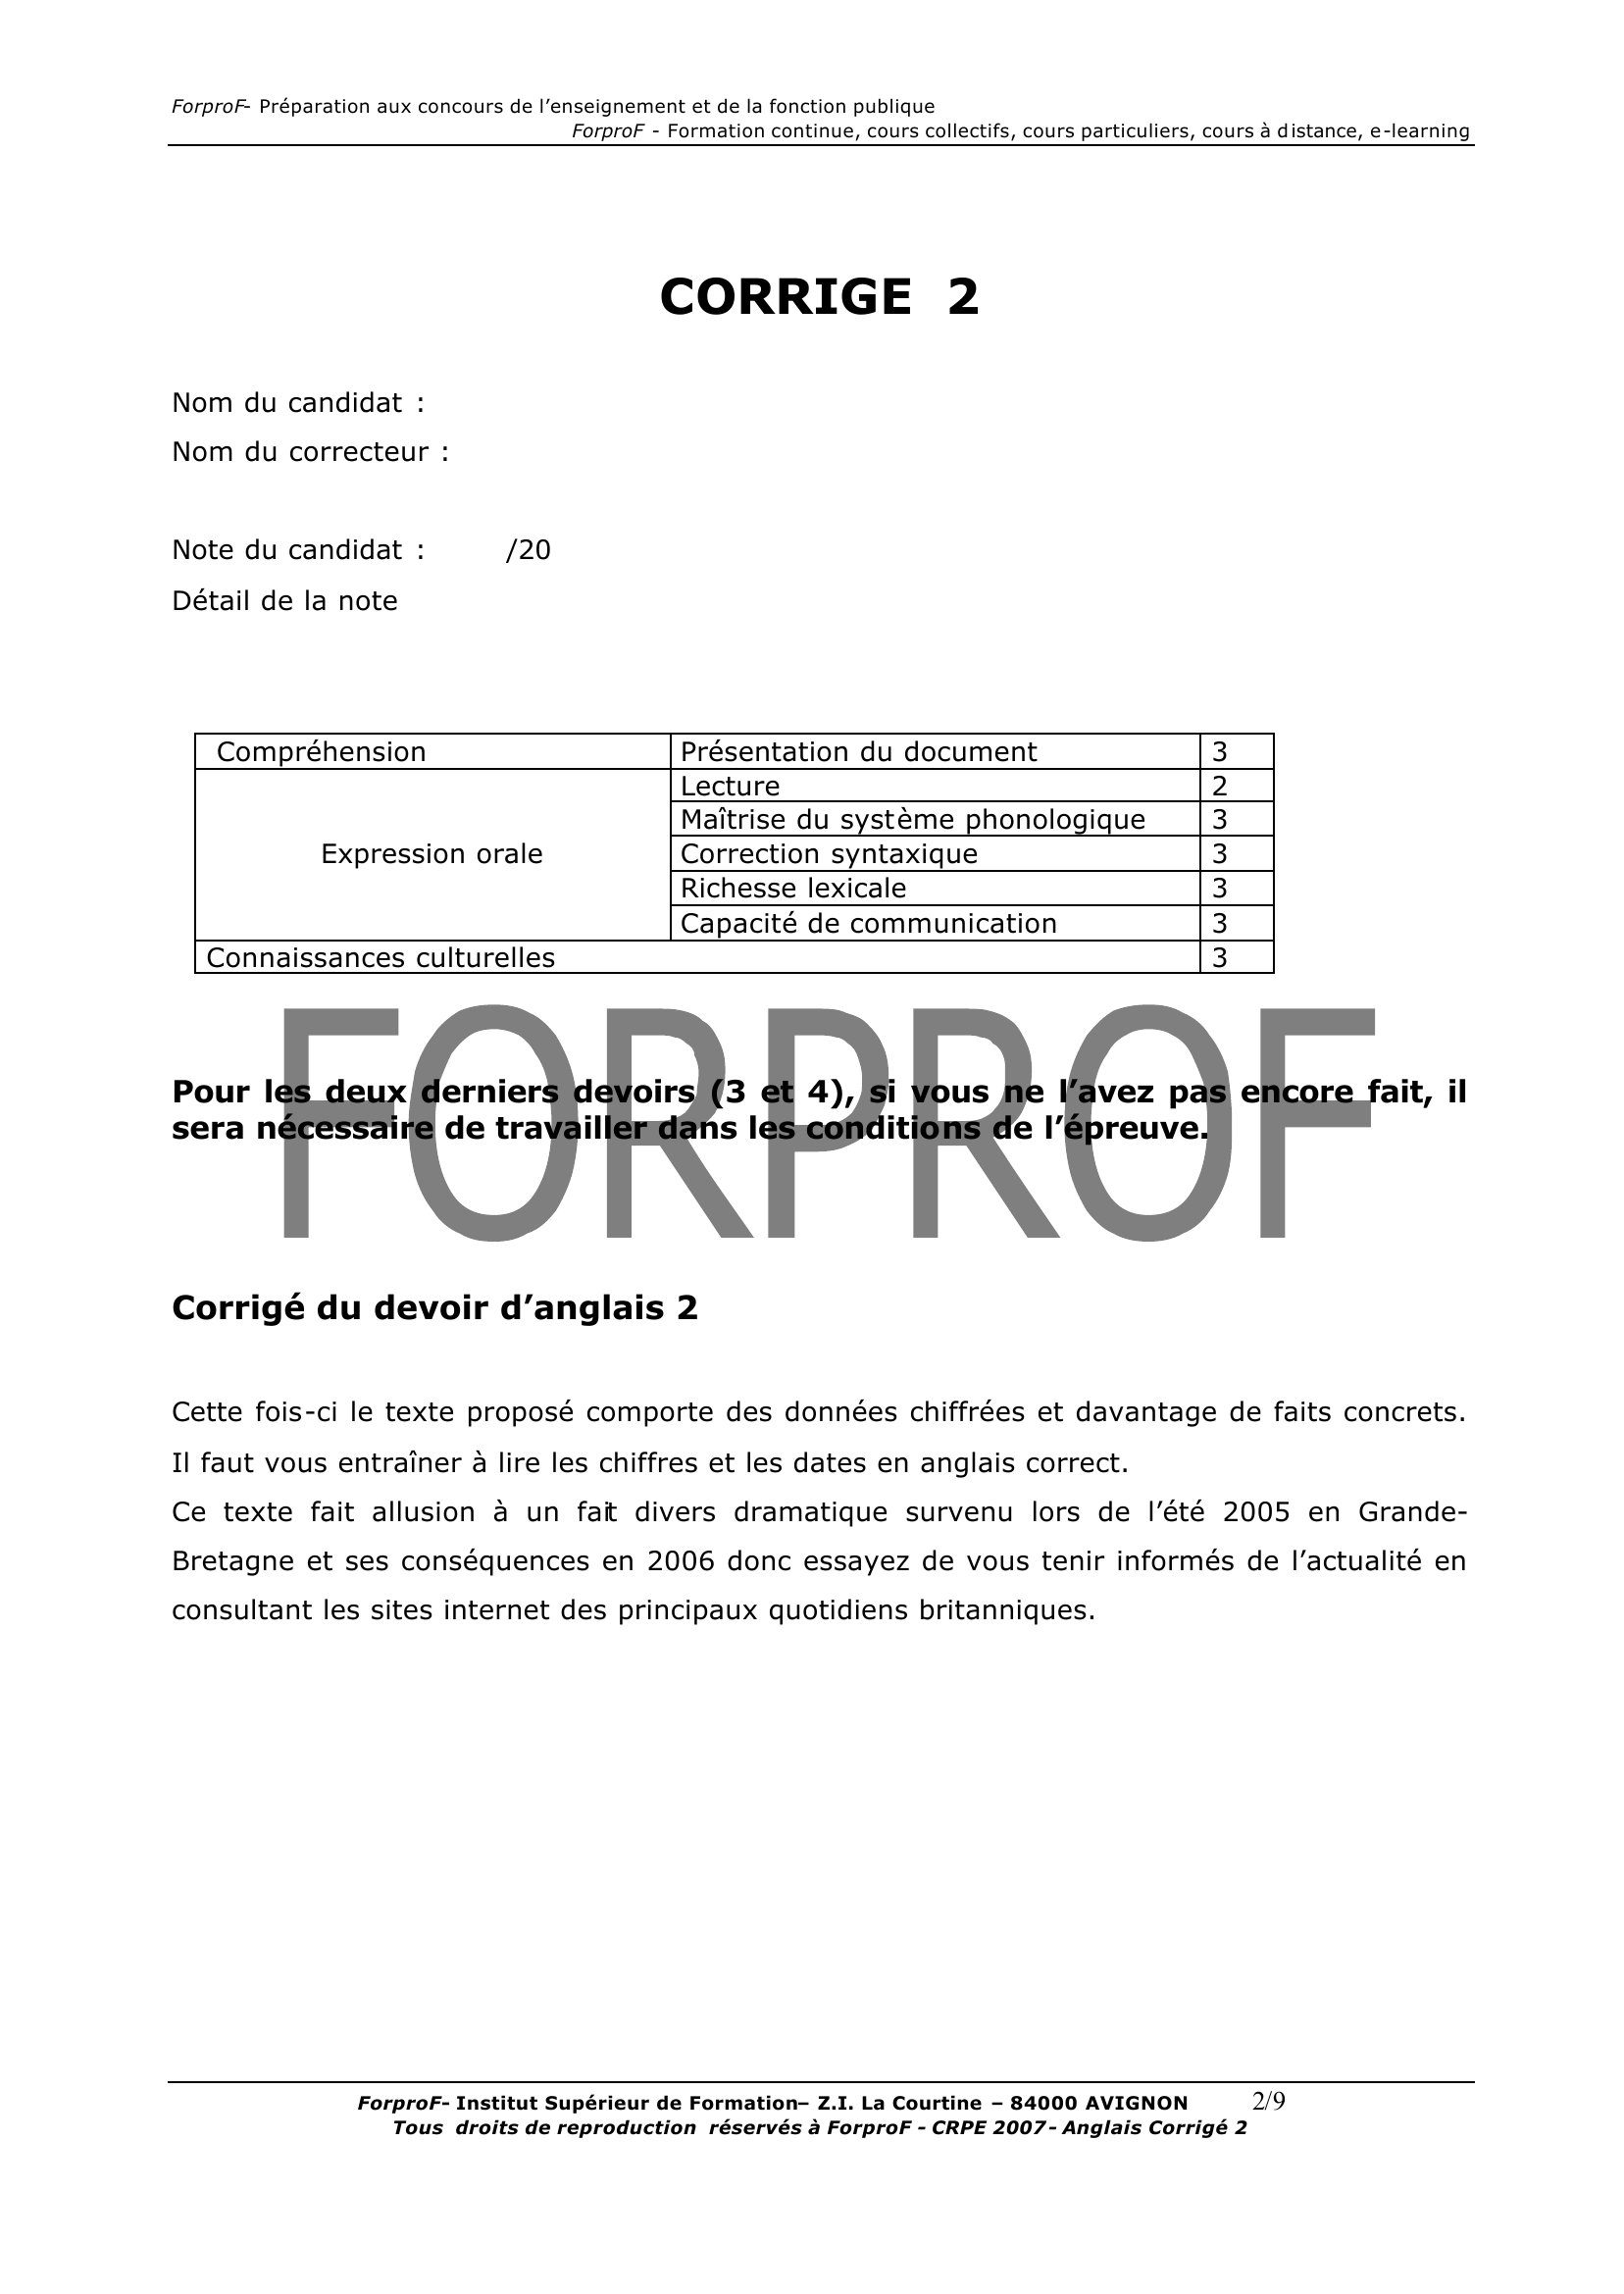 Prévisualisation du document CRPE SESSION 2007

FORPROF
ANGLAIS
Corrigé 2

Réf: CRFDAng - CRAng - CRFDAng2

N° Indigo : 08 2031 2031

Site Internet: http://www.